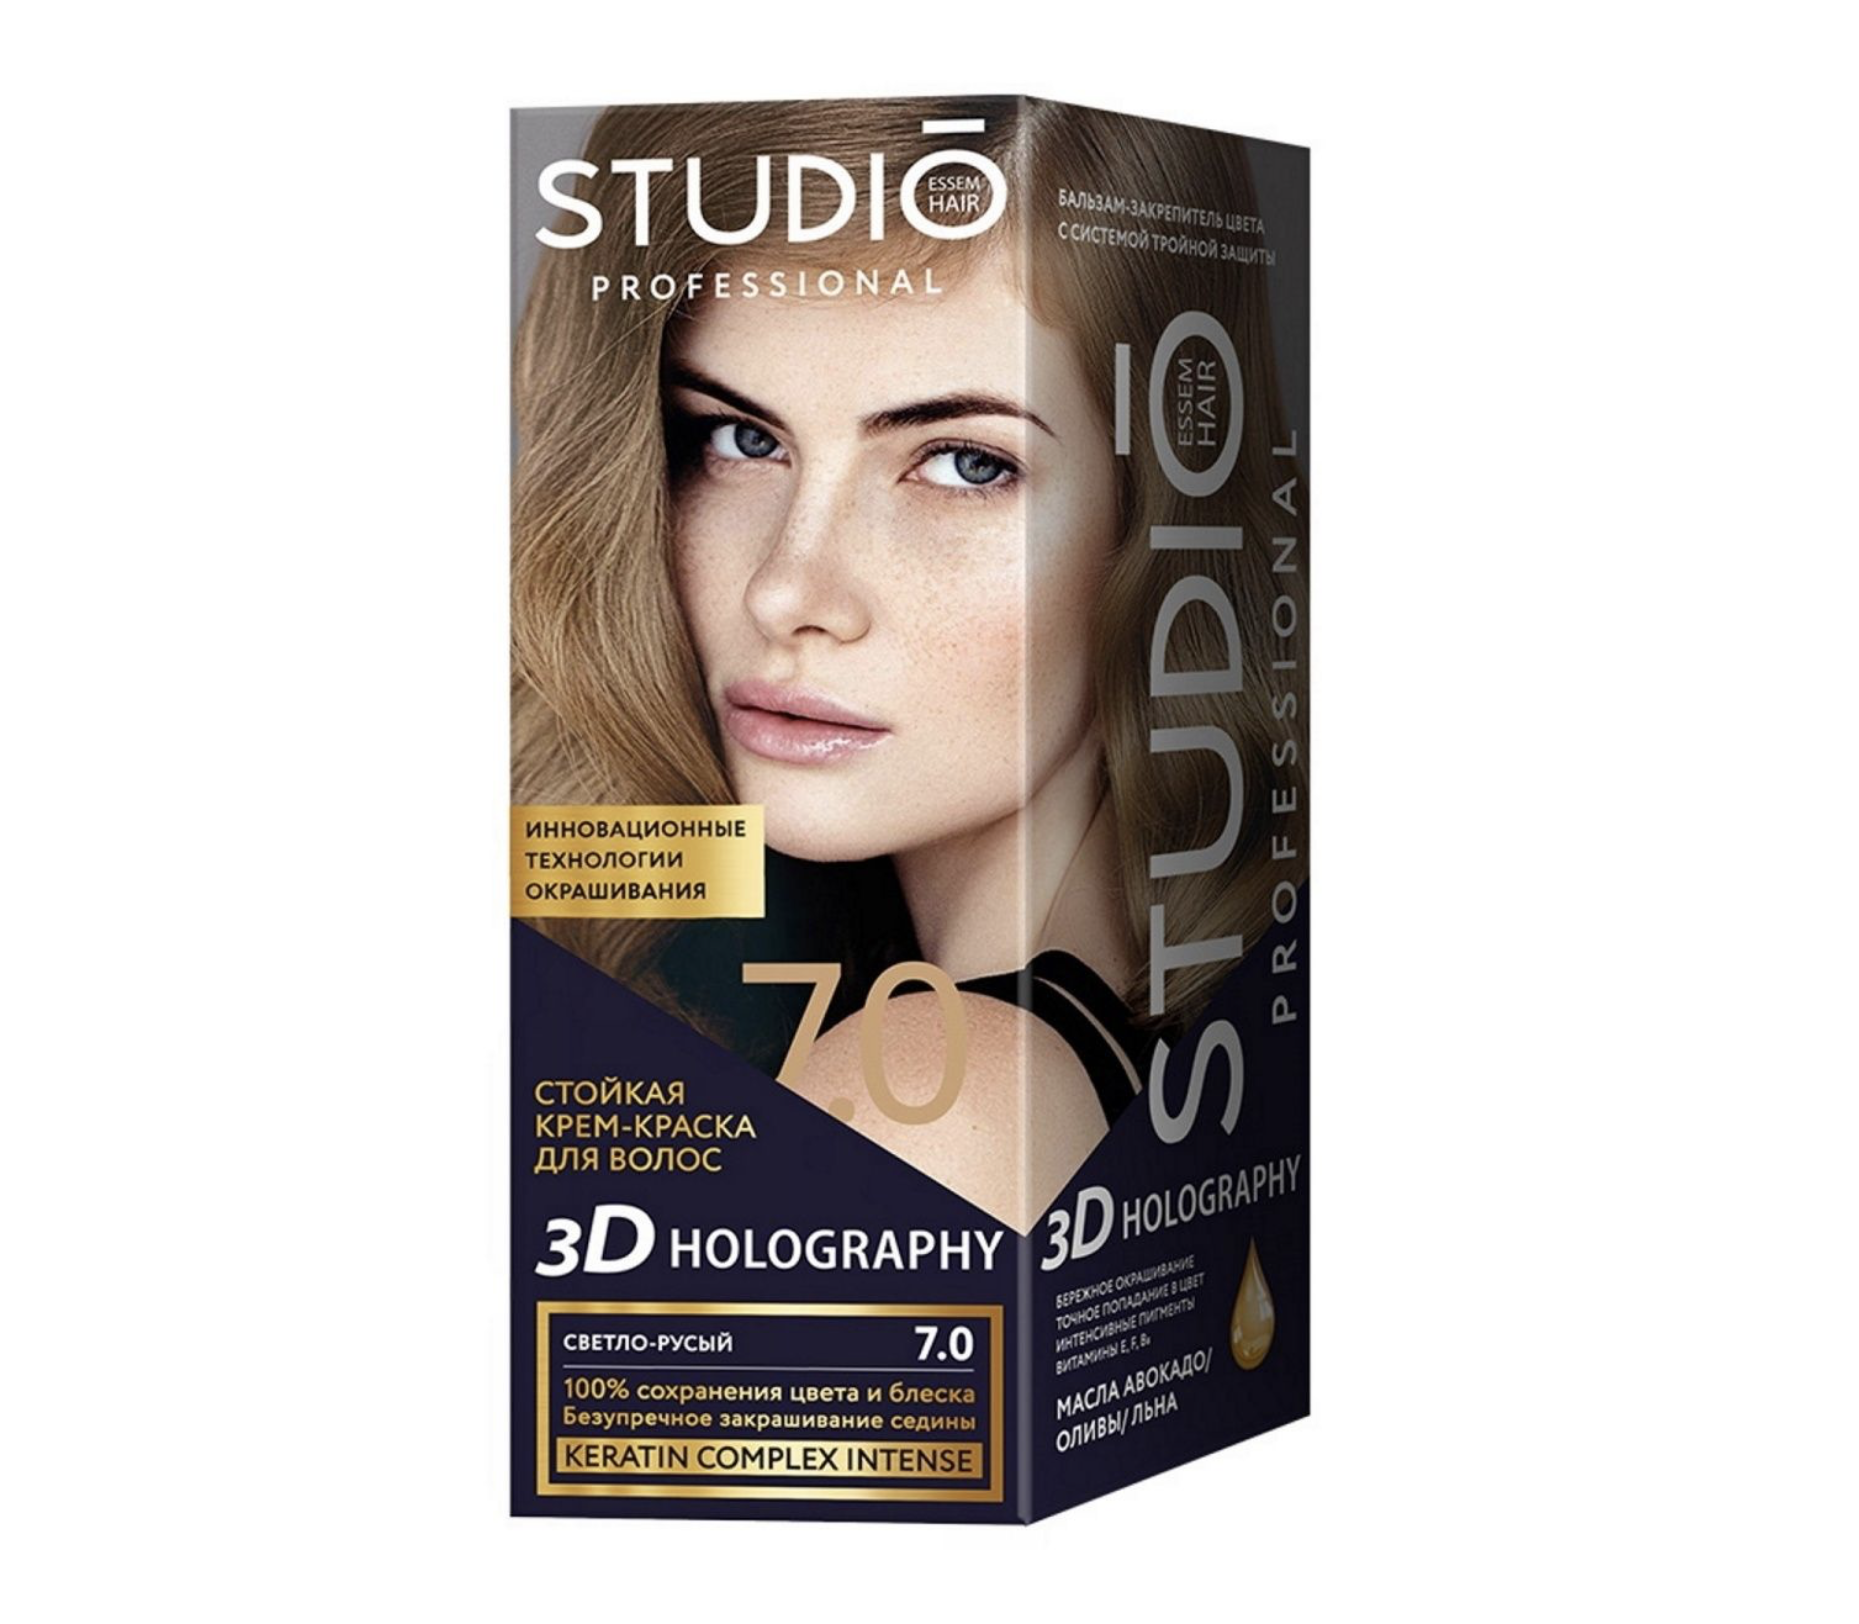   / Studio 3D Holography - -    7.0 - 115 